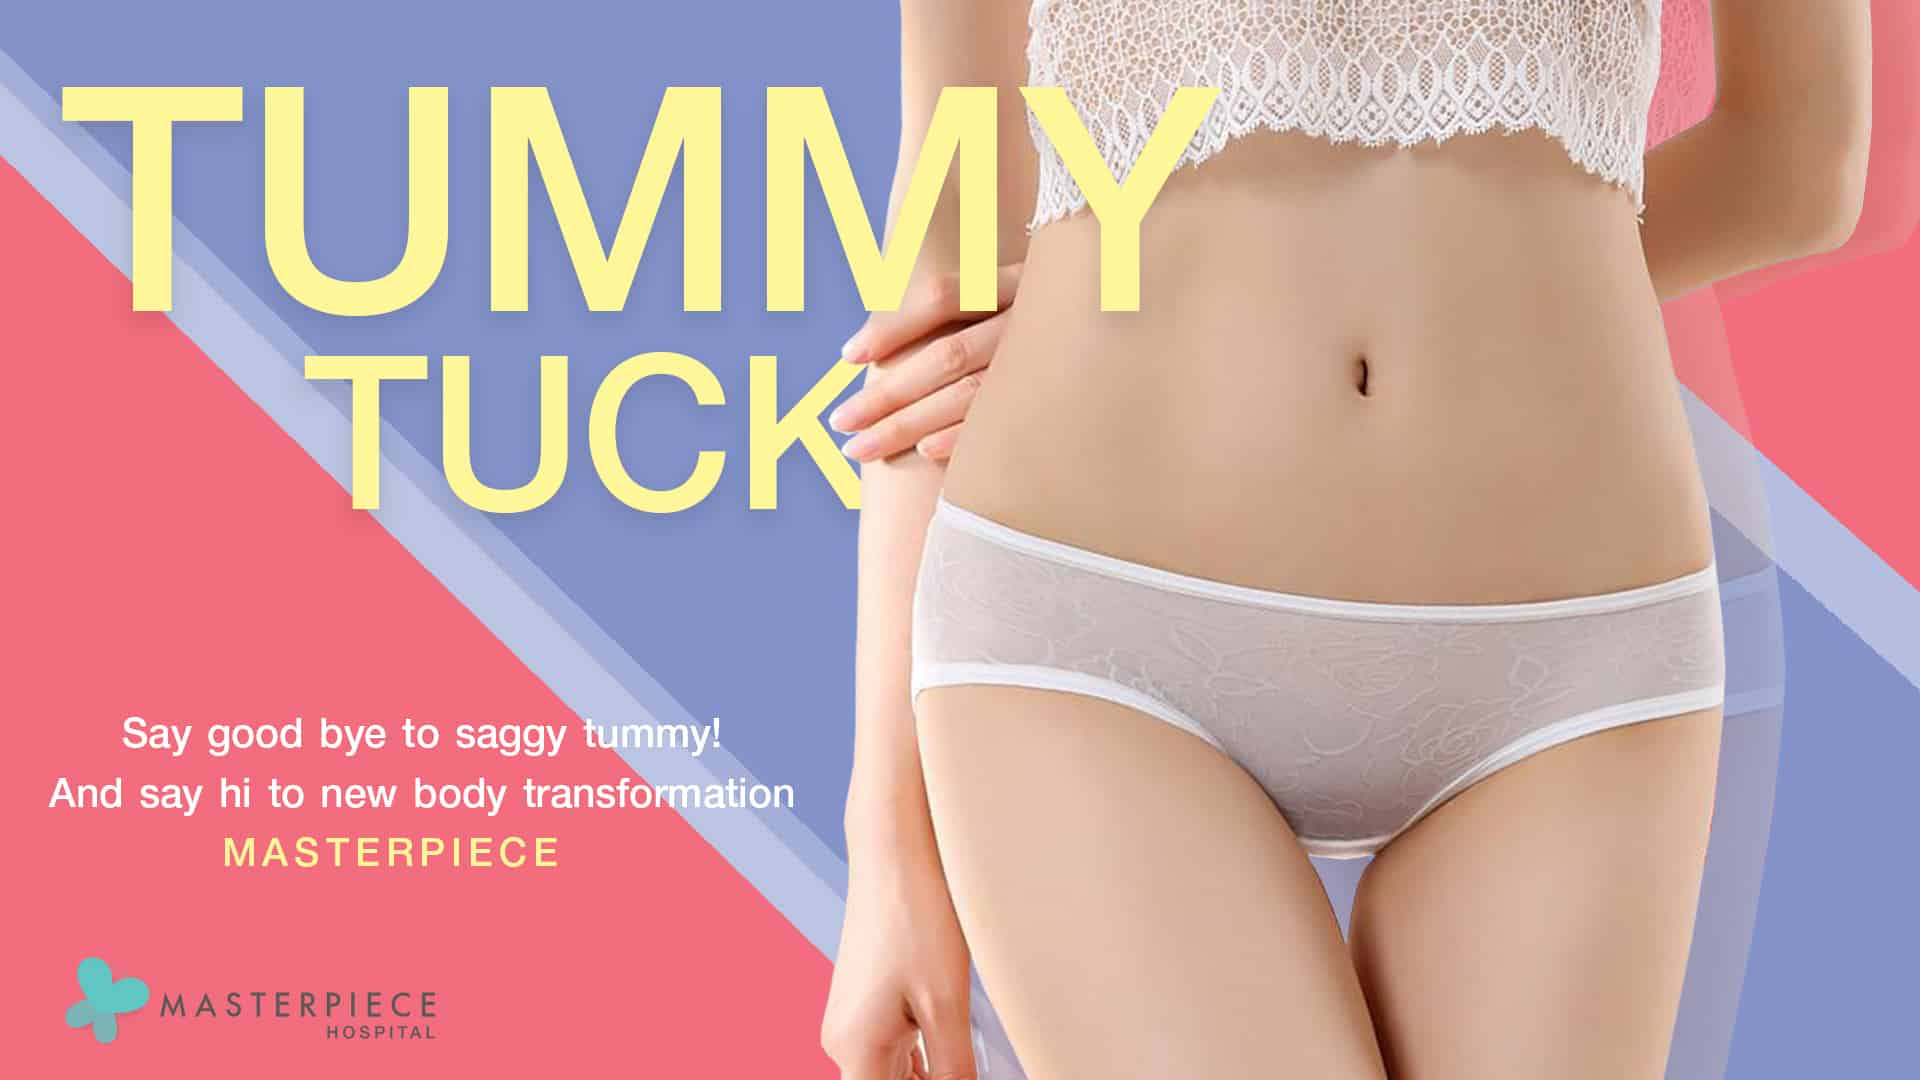 Tummy Tuck - Masterpiece Hospital